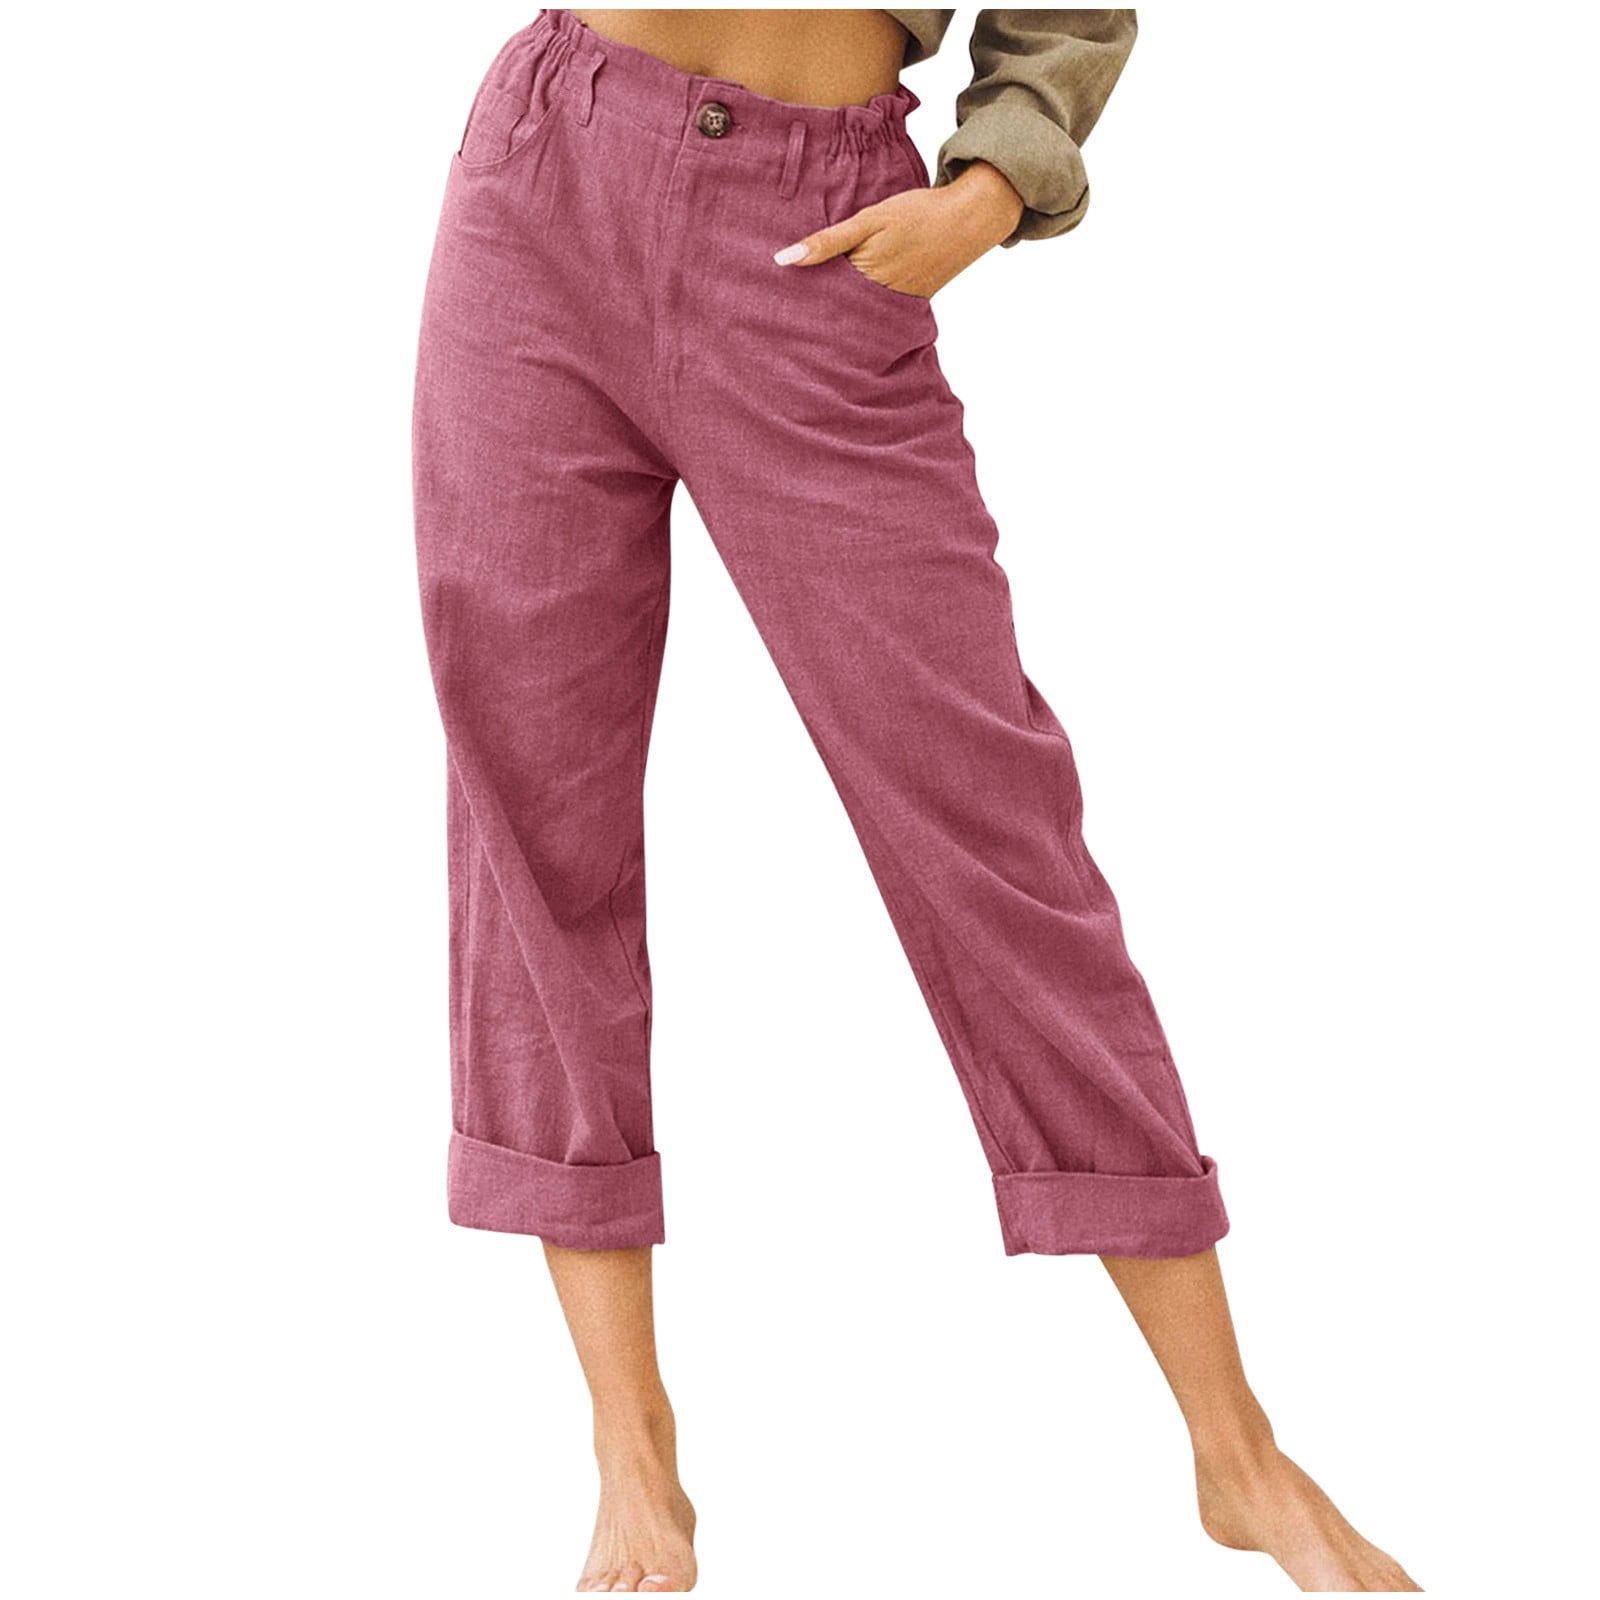 Womens Back Trousers Casual Elastic Pants Drawstring Cotton Pants High ...